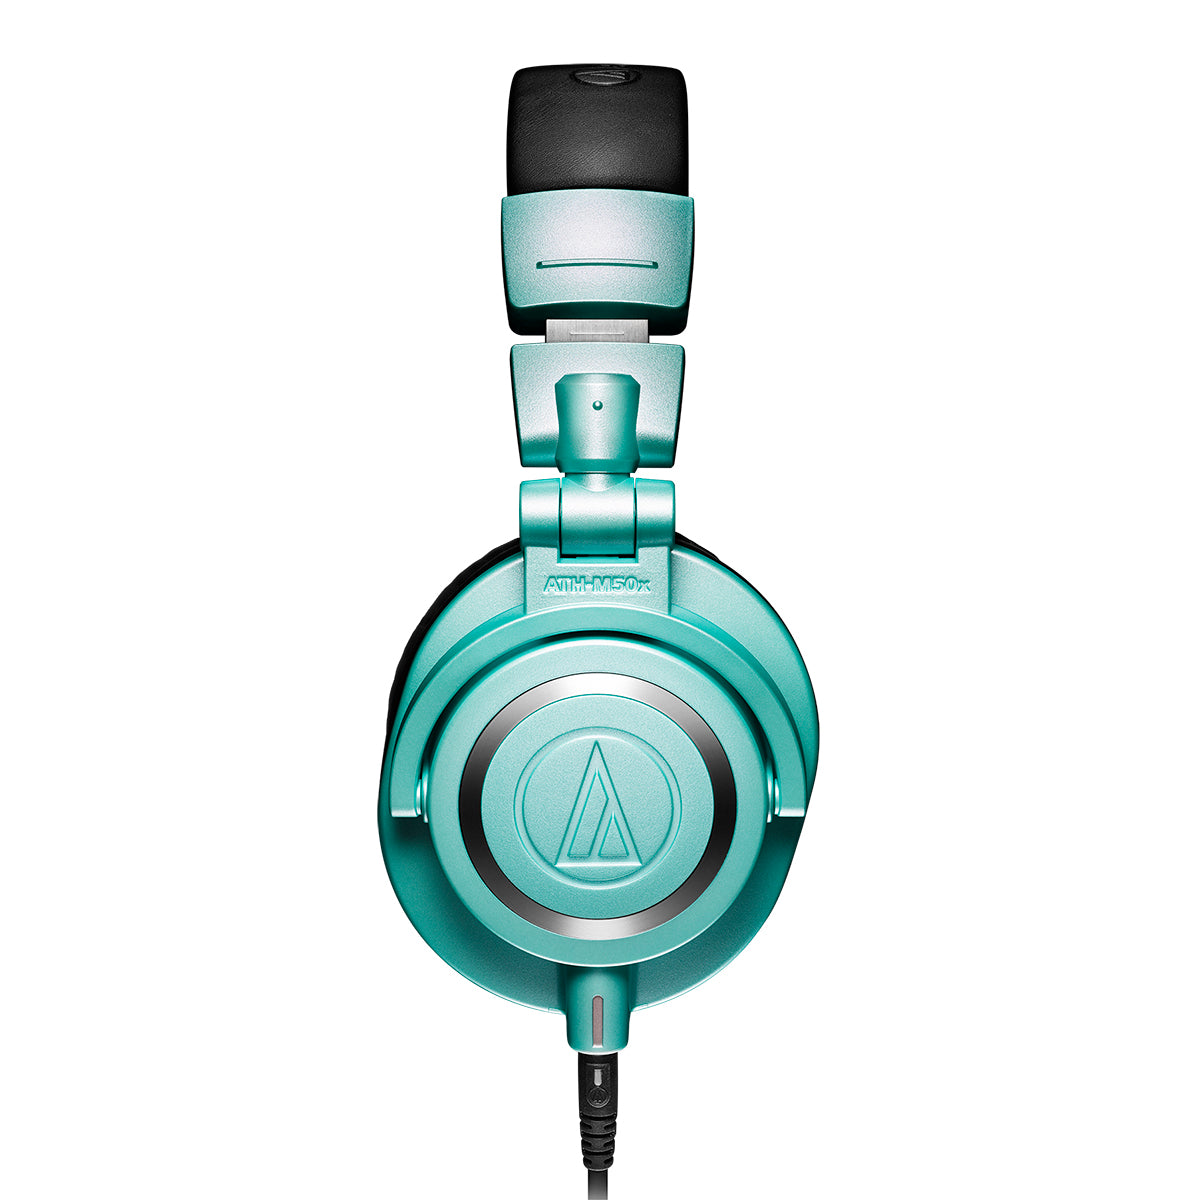 Audio-Technica ATH-M50 and ATH-M50x headphones go Ice Blue